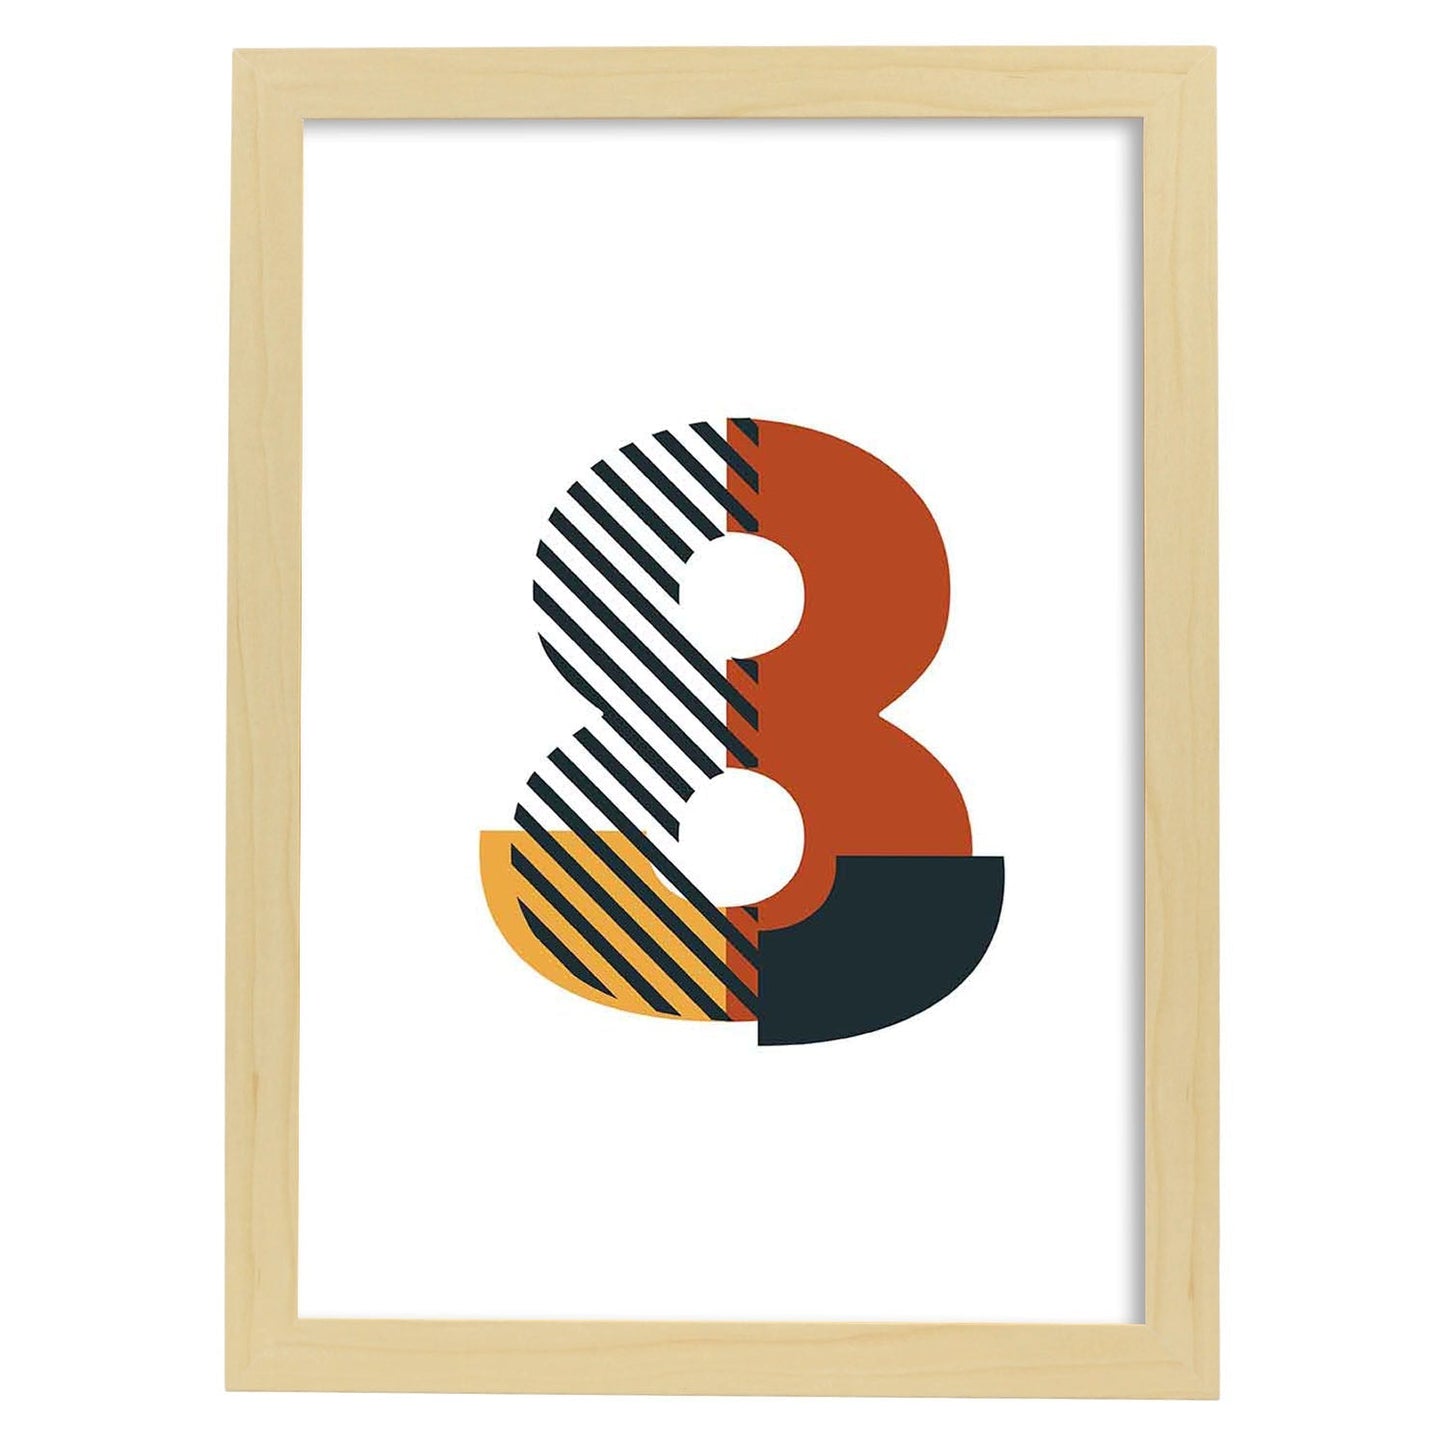 Poster de número 8. Lámina estilo Geometria con imágenes del alfabeto.-Artwork-Nacnic-A4-Marco Madera clara-Nacnic Estudio SL